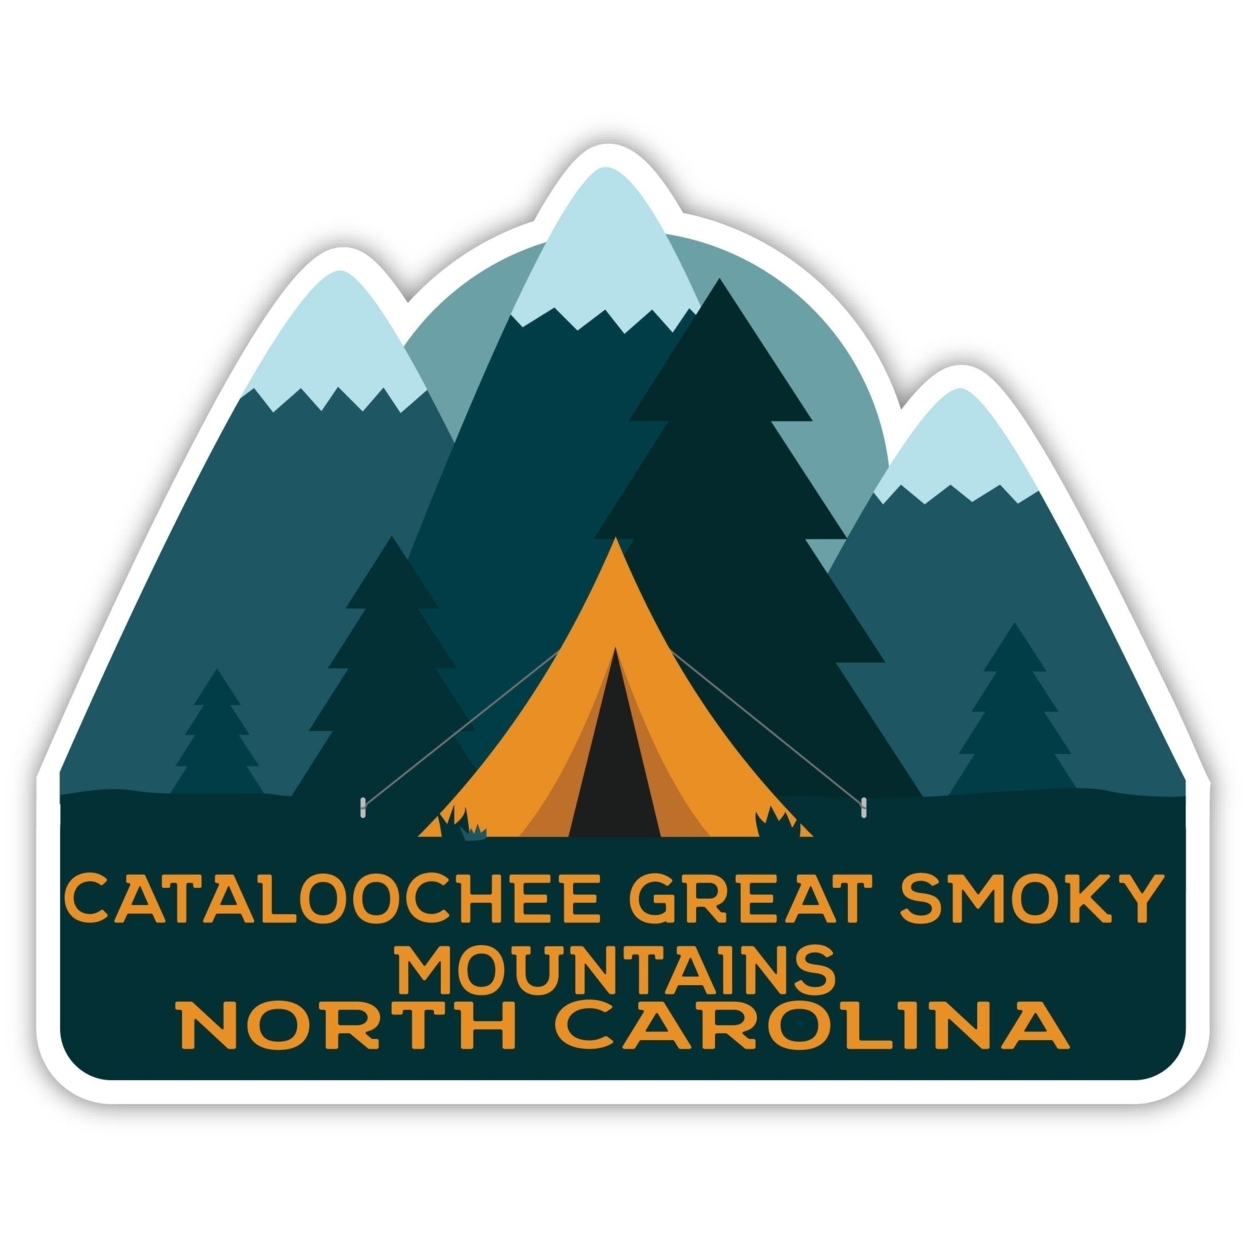 Cataloochee Great Smoky Mountains North Carolina Souvenir Decorative Stickers (Choose Theme And Size) - Single Unit, 8-Inch, Tent